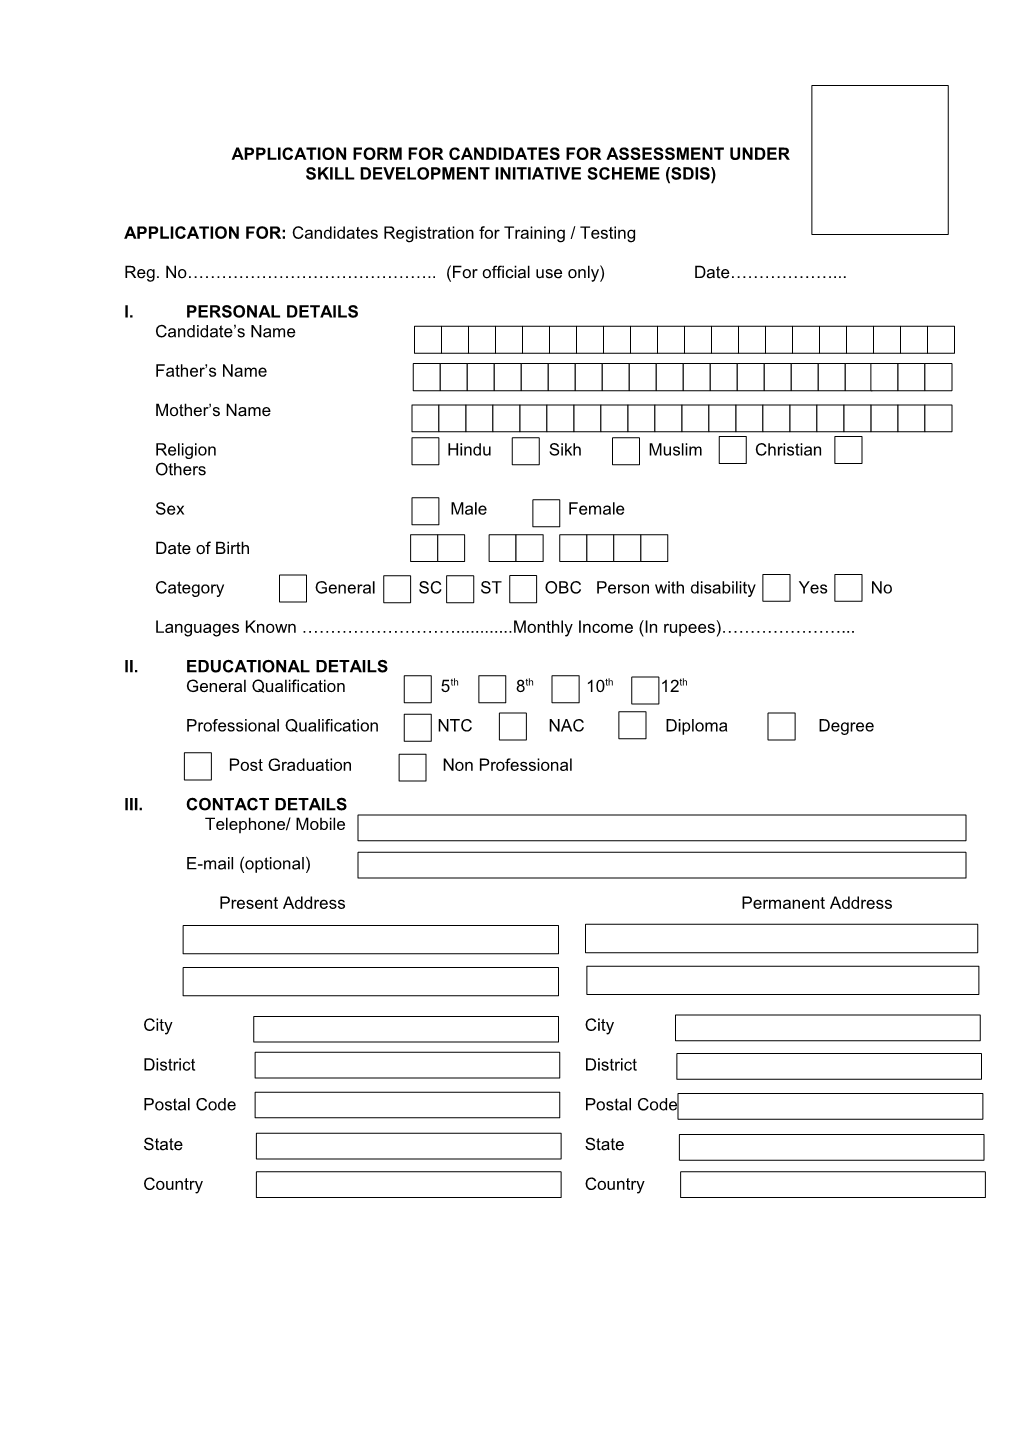 Application Form for Candidates for Assessment Under